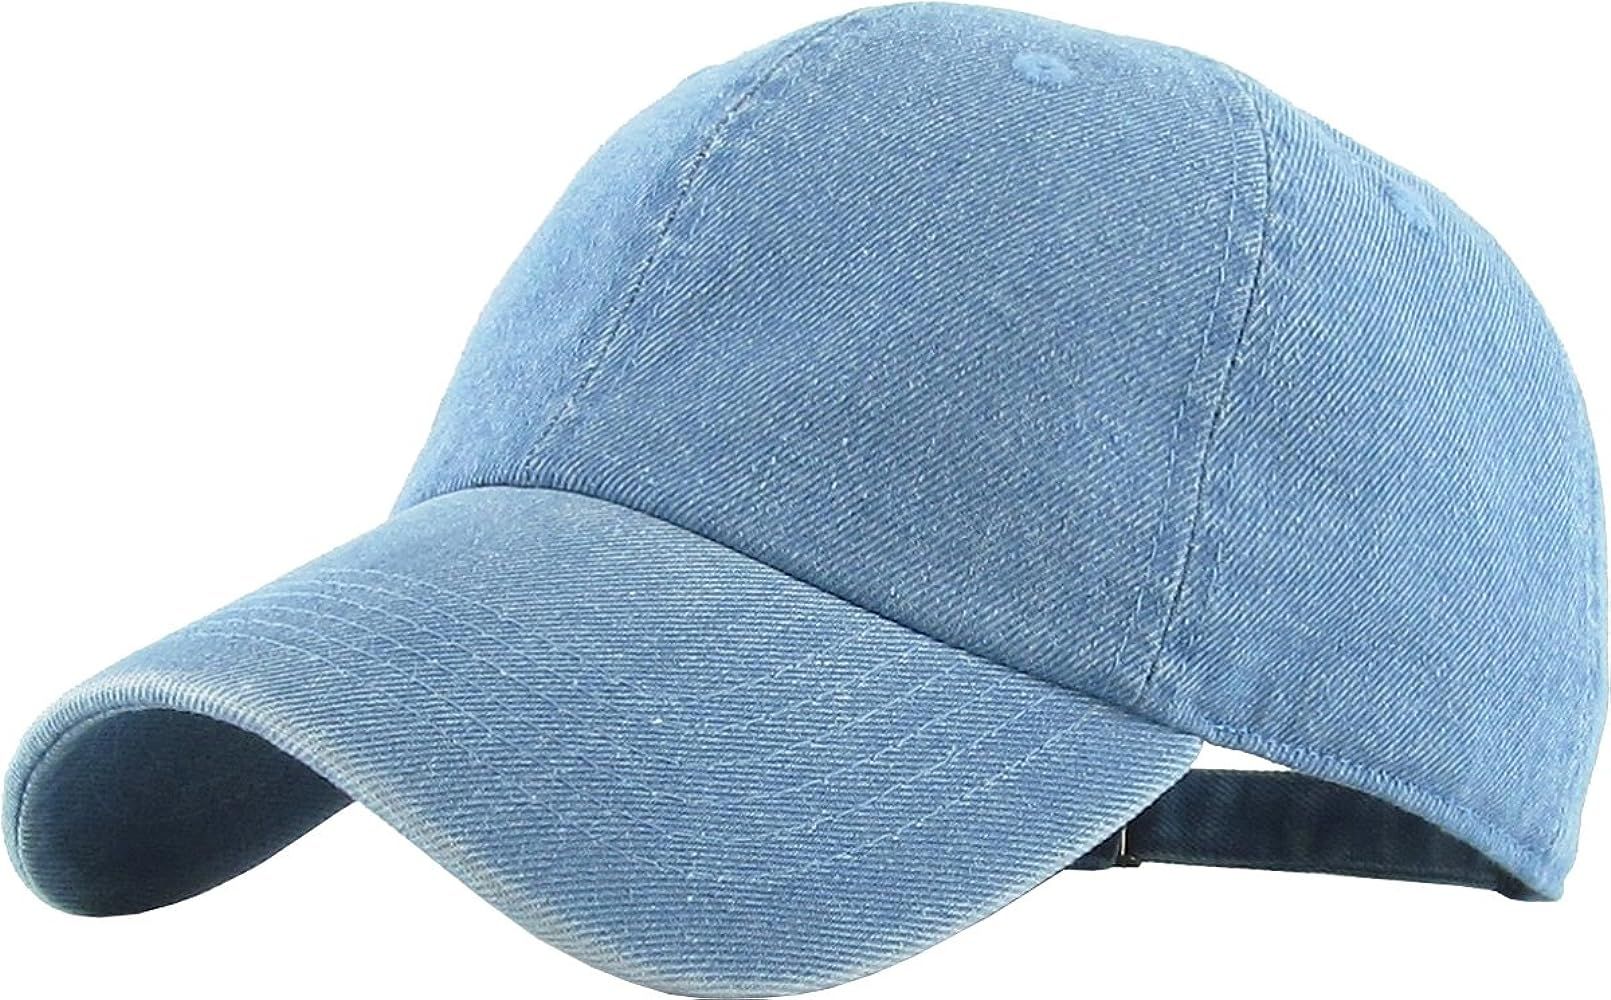 Classic Polo Style Baseball Cap All Cotton Made Adjustable Fits Men Women Low Profile Black Hat U... | Amazon (US)